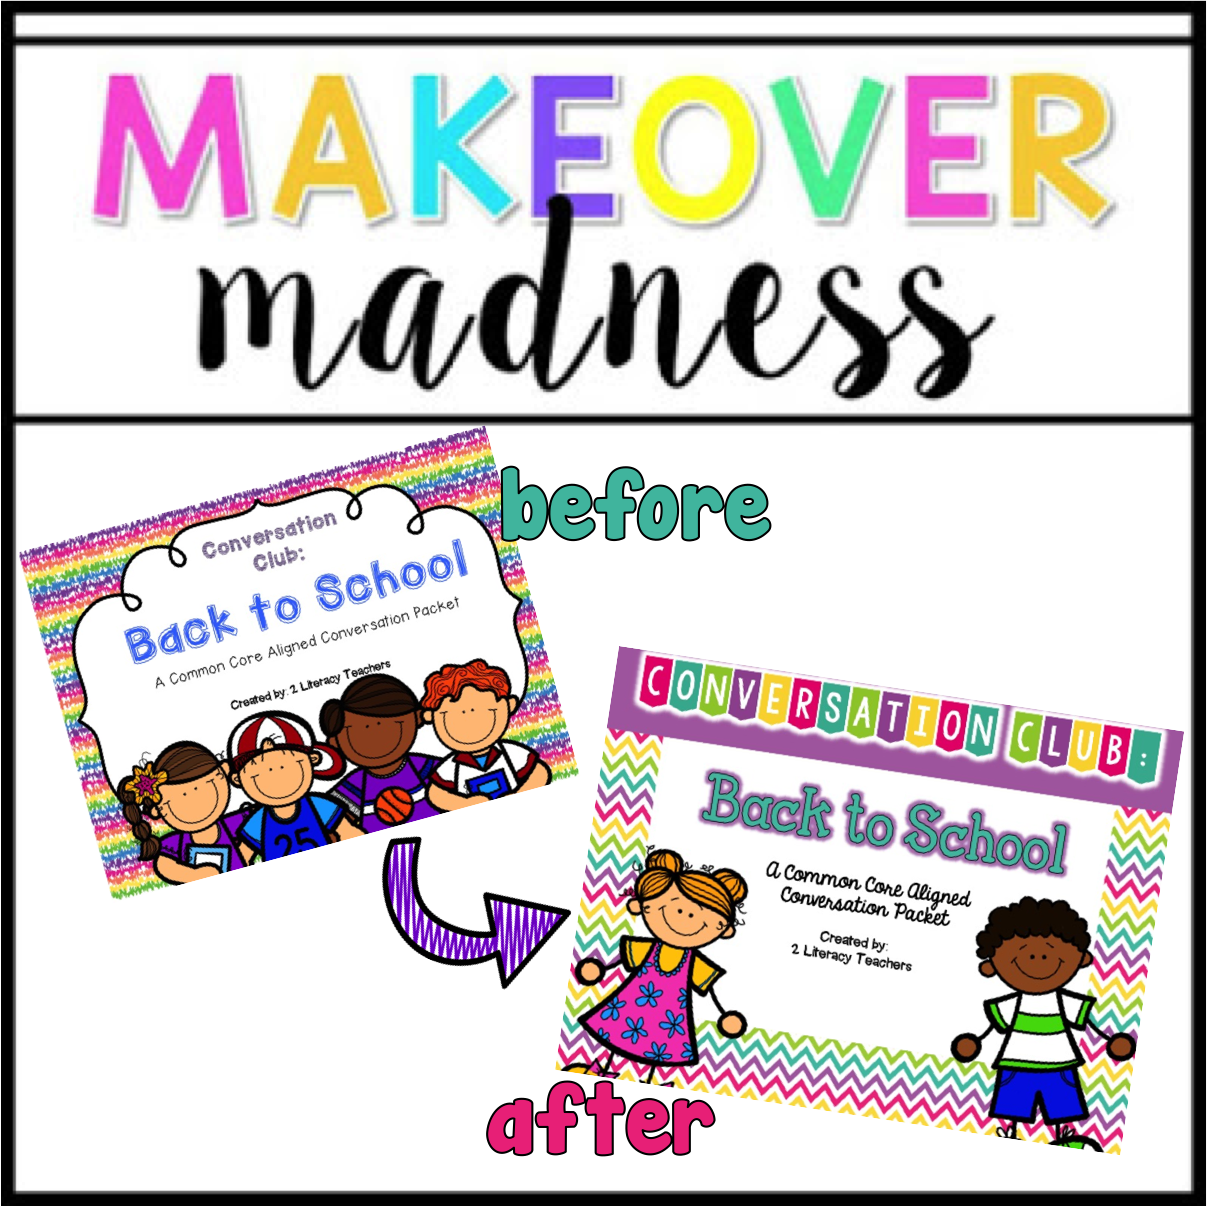 TPT Seller Challenge Week 1: Makeover Madness